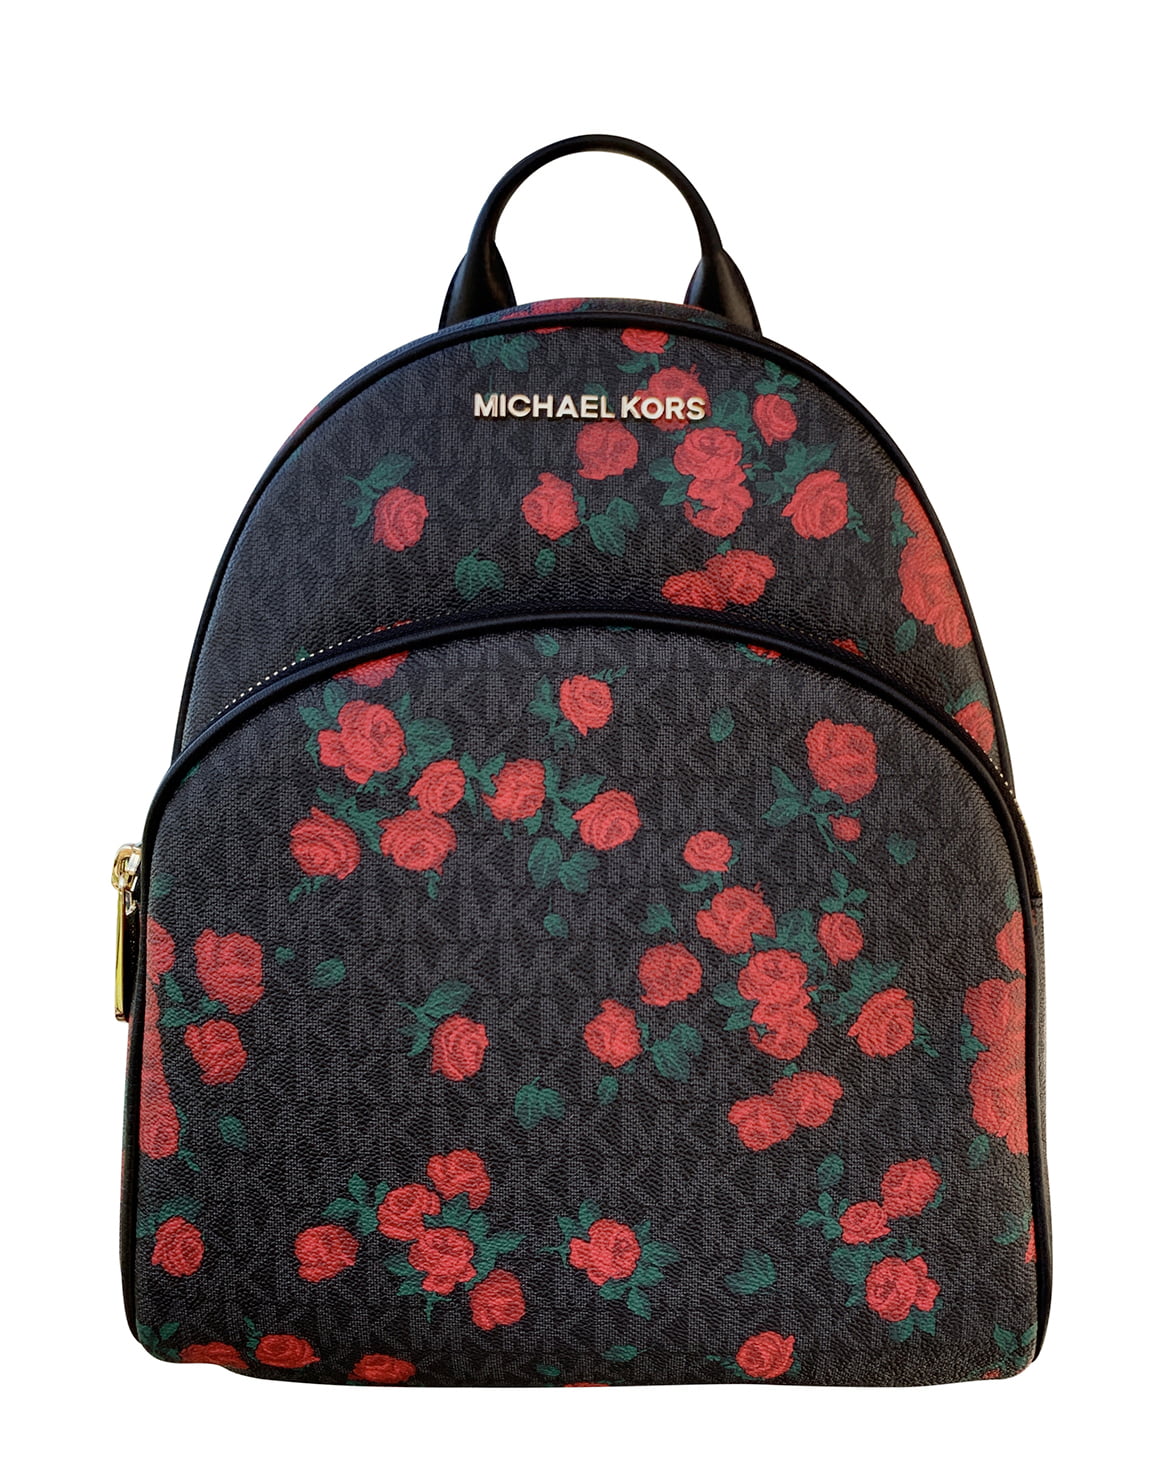 michael kors rose backpack